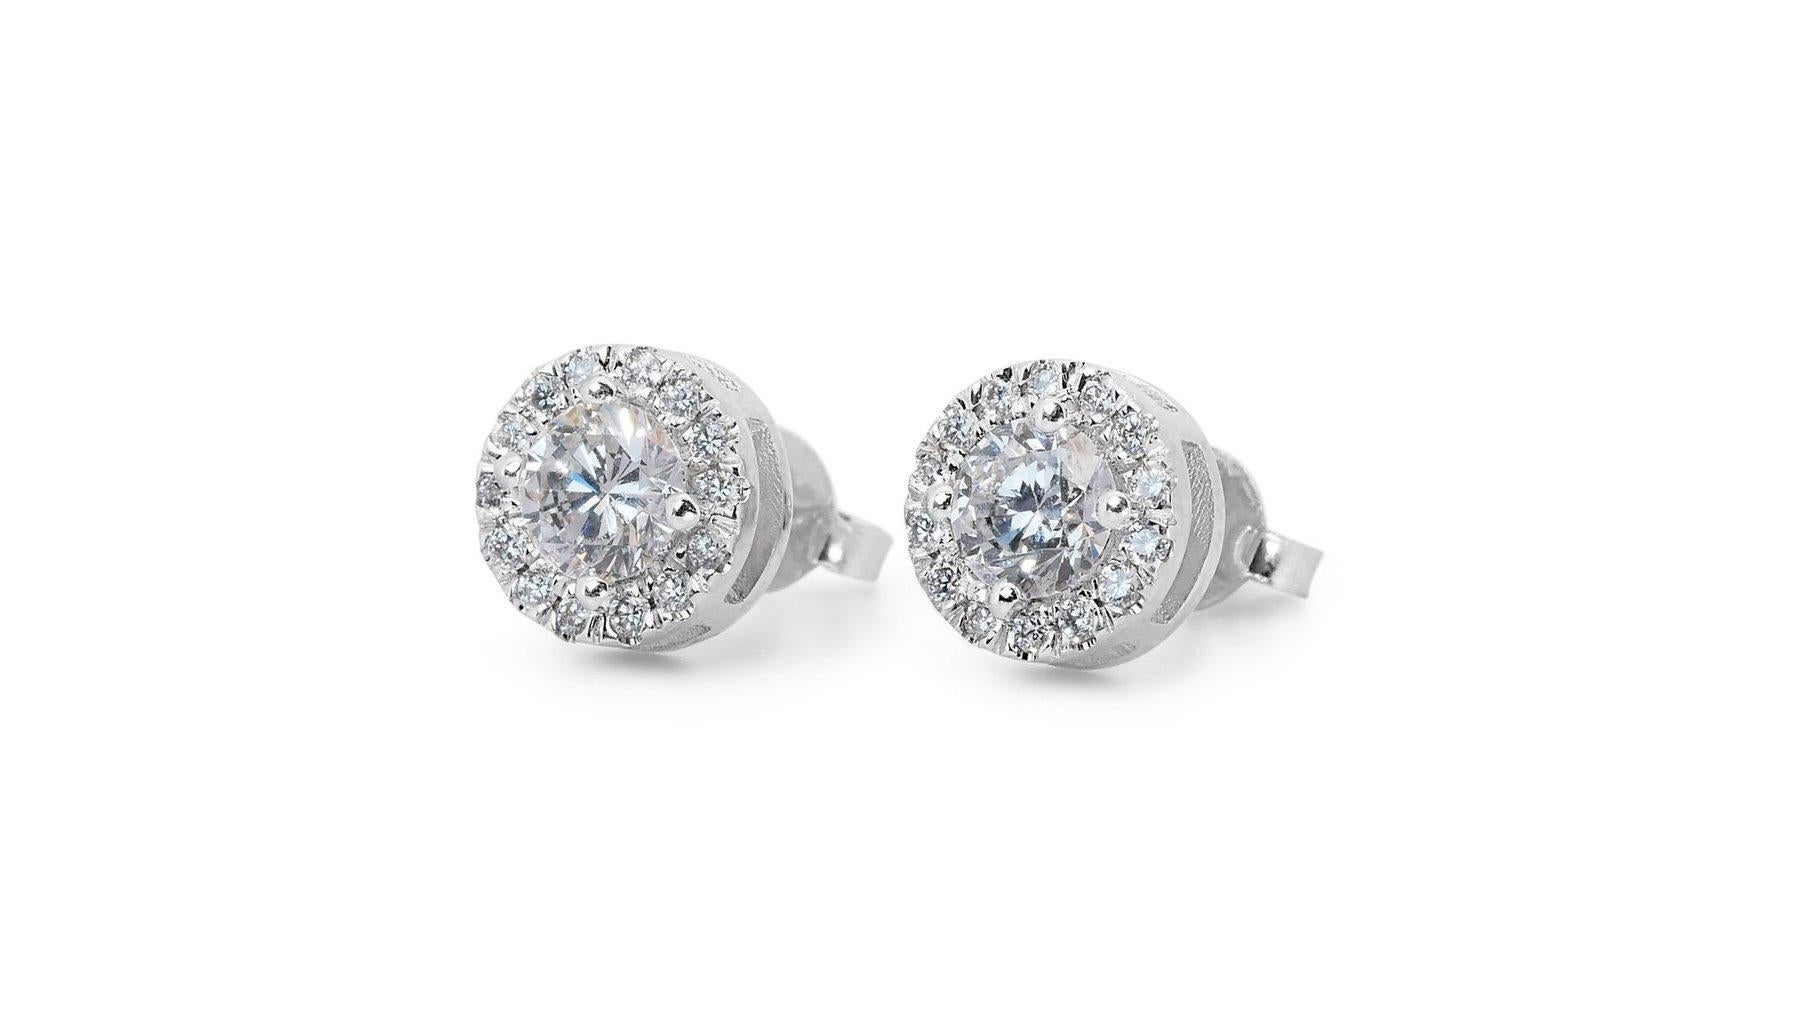 Elegant 1.68ct Diamond Halo Stud Earrings in 18k White Gold - GIA Certified For Sale 2